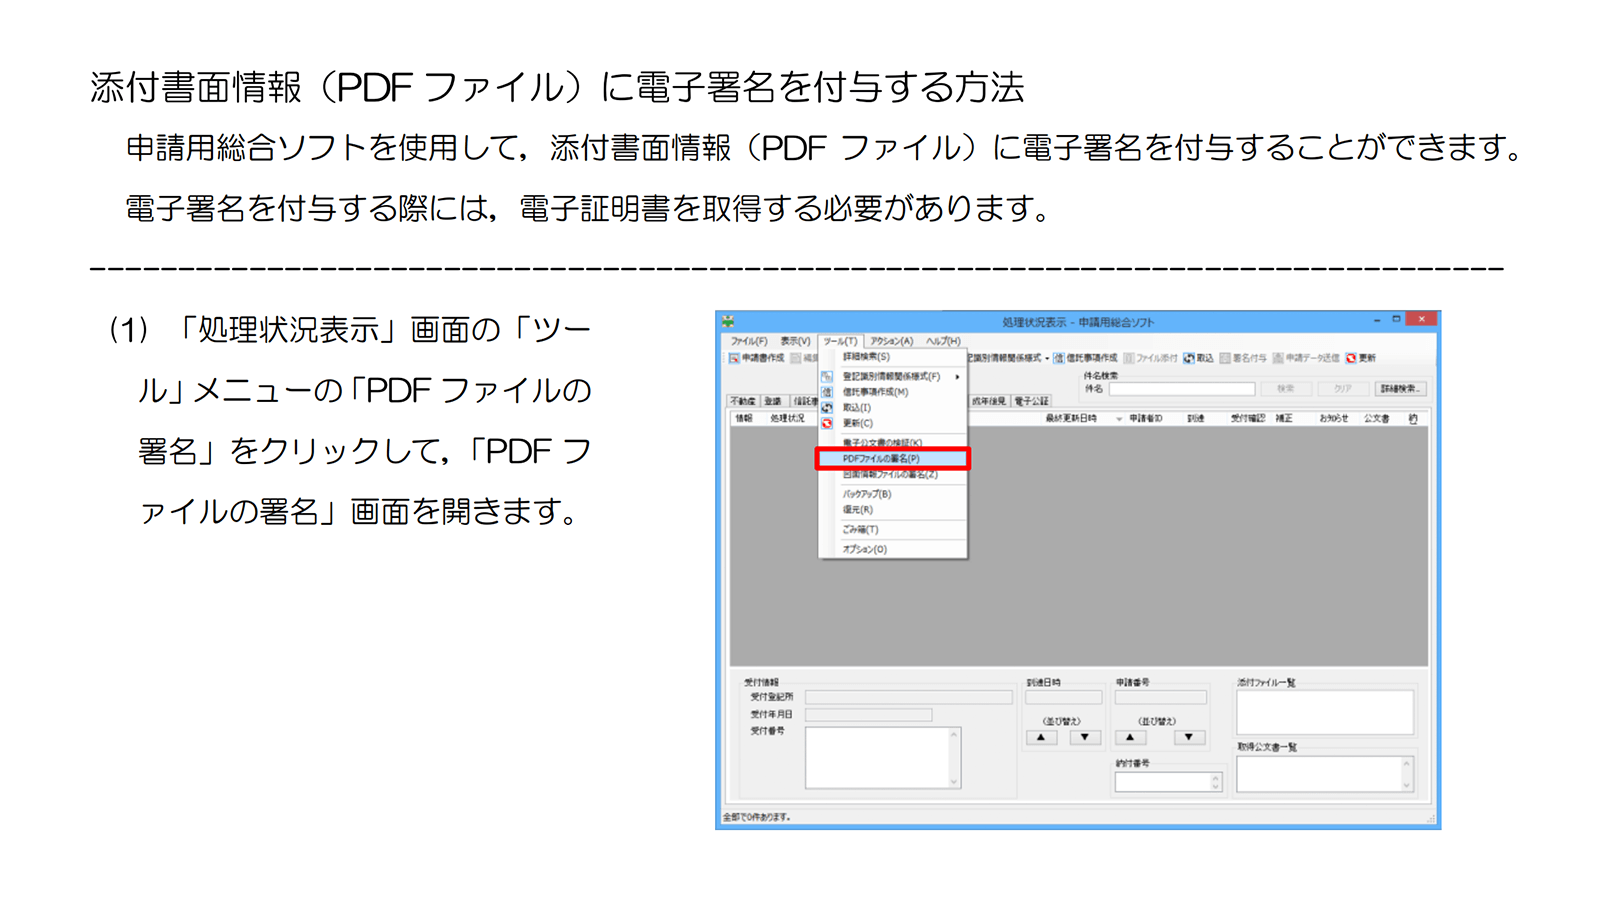 http://www.moj.go.jp/content/001314623.pdf 2020年6月18日最終アクセス